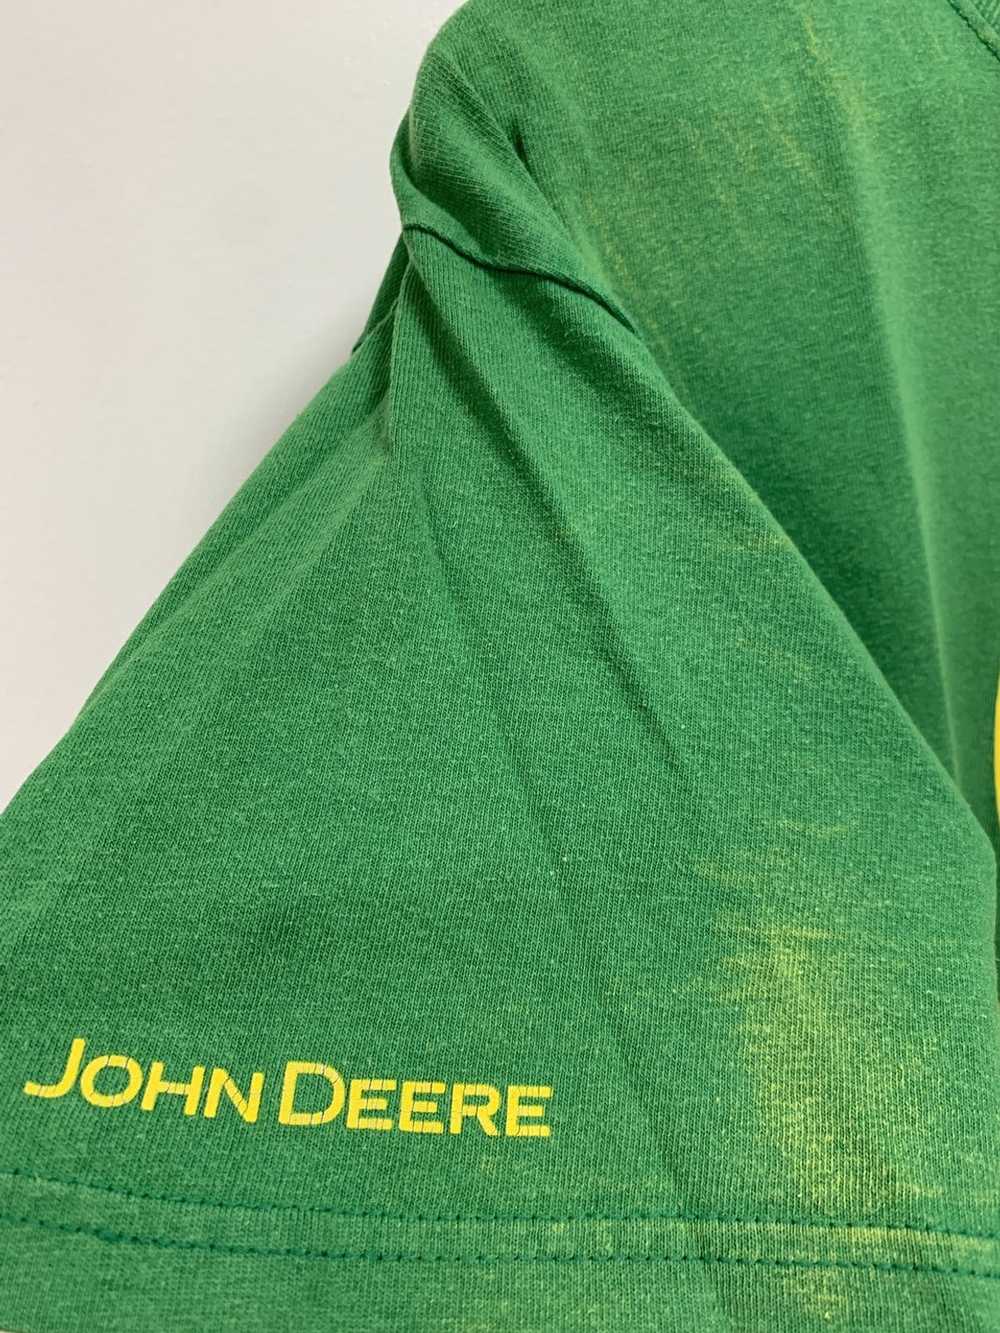 John Deere × Vintage Vintage John Deere t shirt - image 7